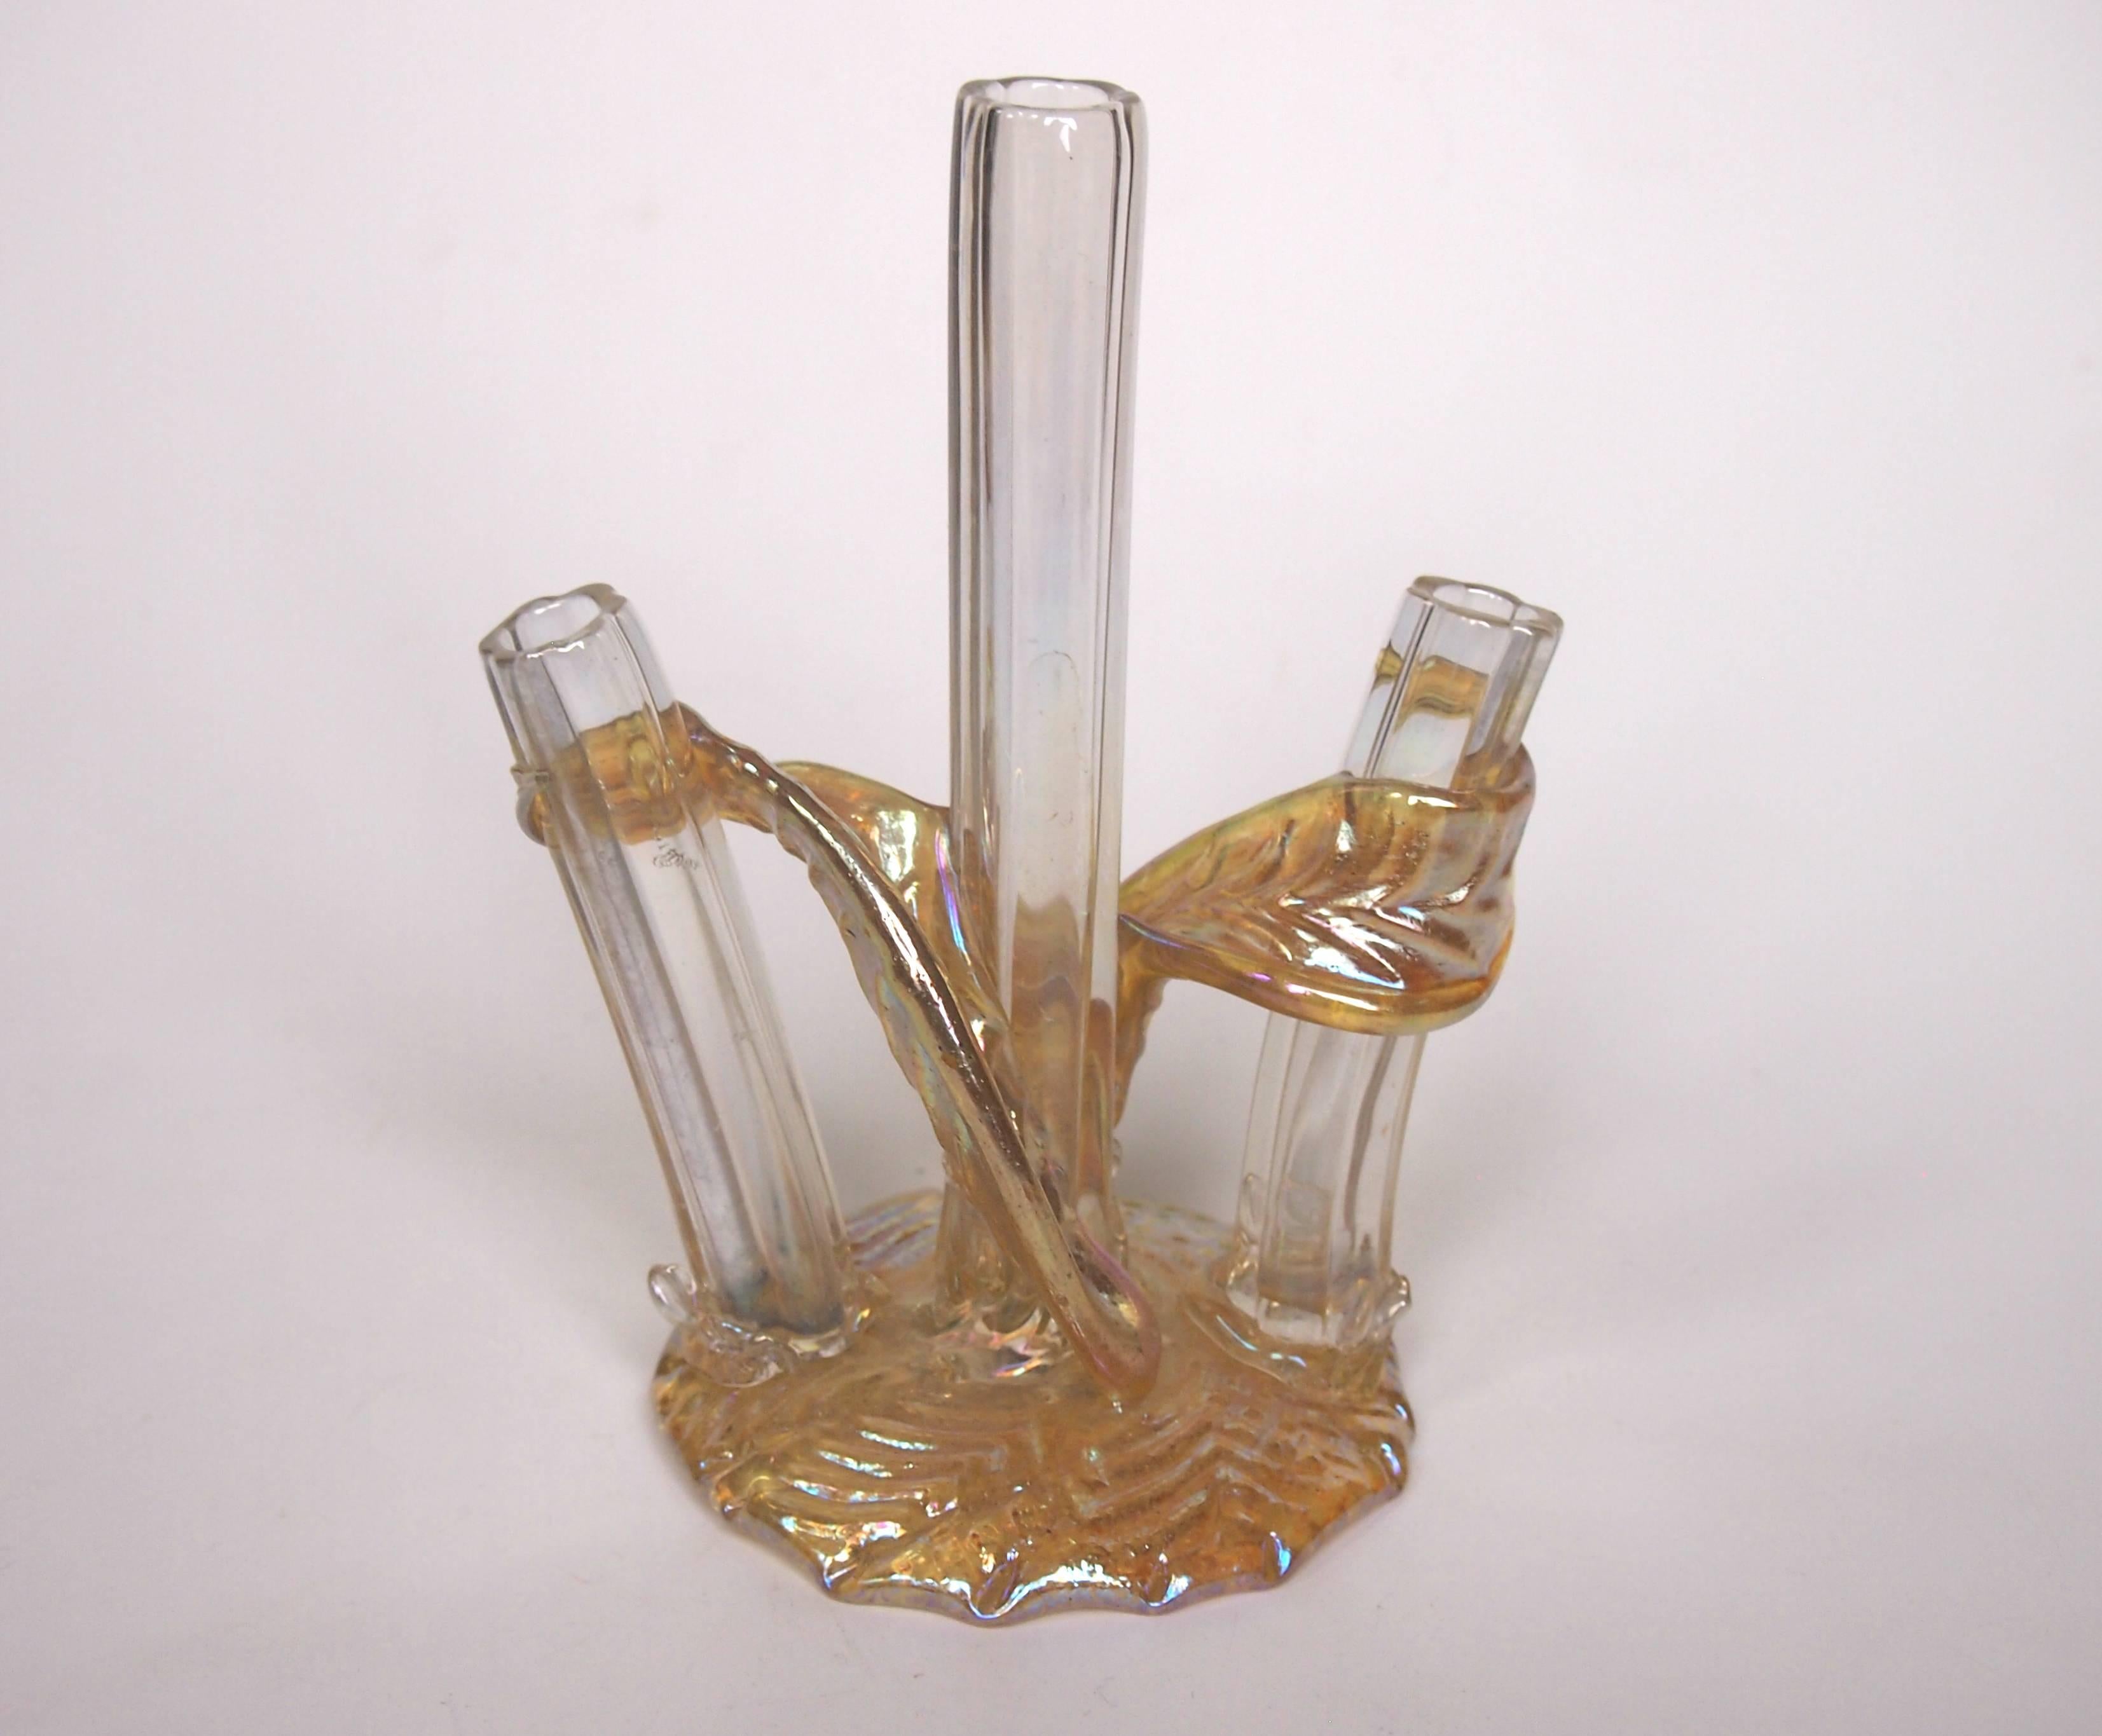 Austrian Bohemian Art Nouveau Loetz Glass Stick Vase Made for Max Emanuel in 1910 For Sale